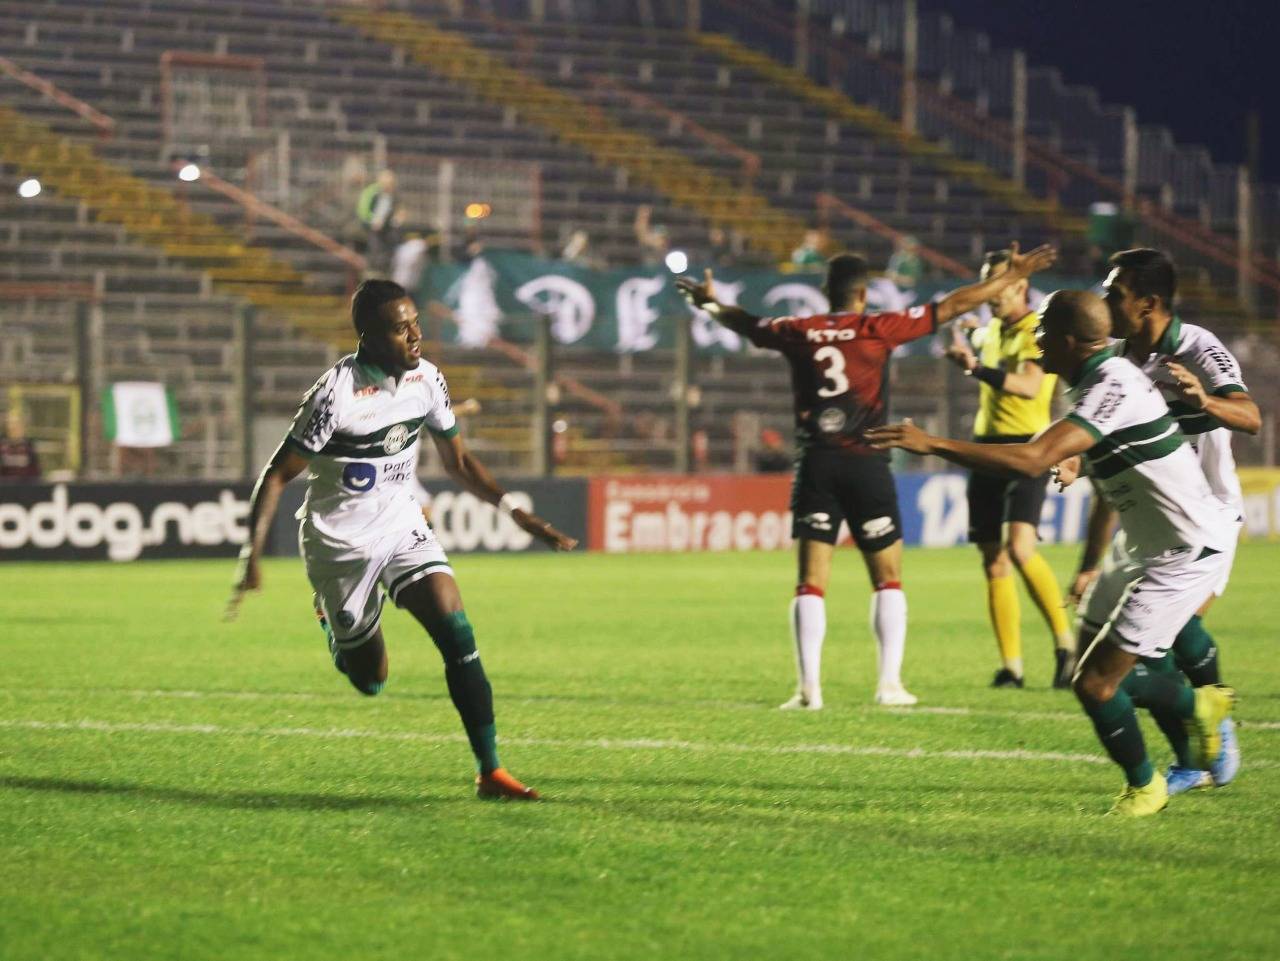 Kelvin comemora primeiro gol pelo Coritiba. Foto: Diego Marinelli/Coritiba Foot Ball Club